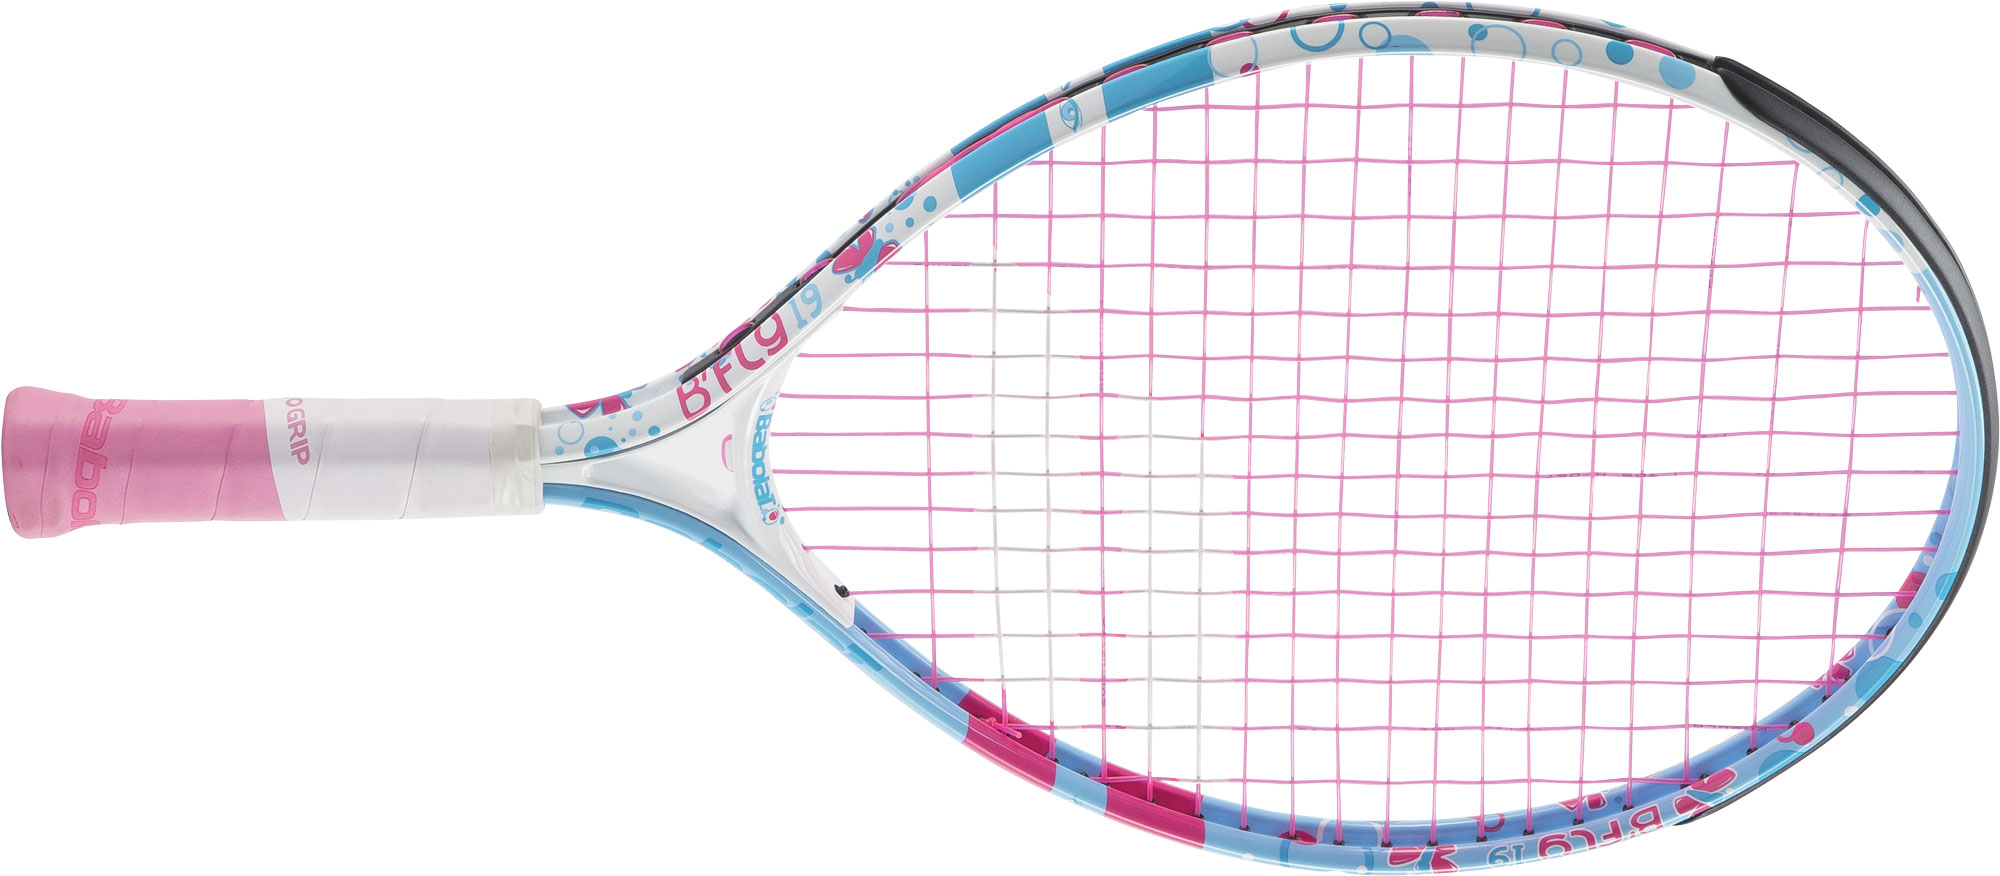 Children’s tennis racket